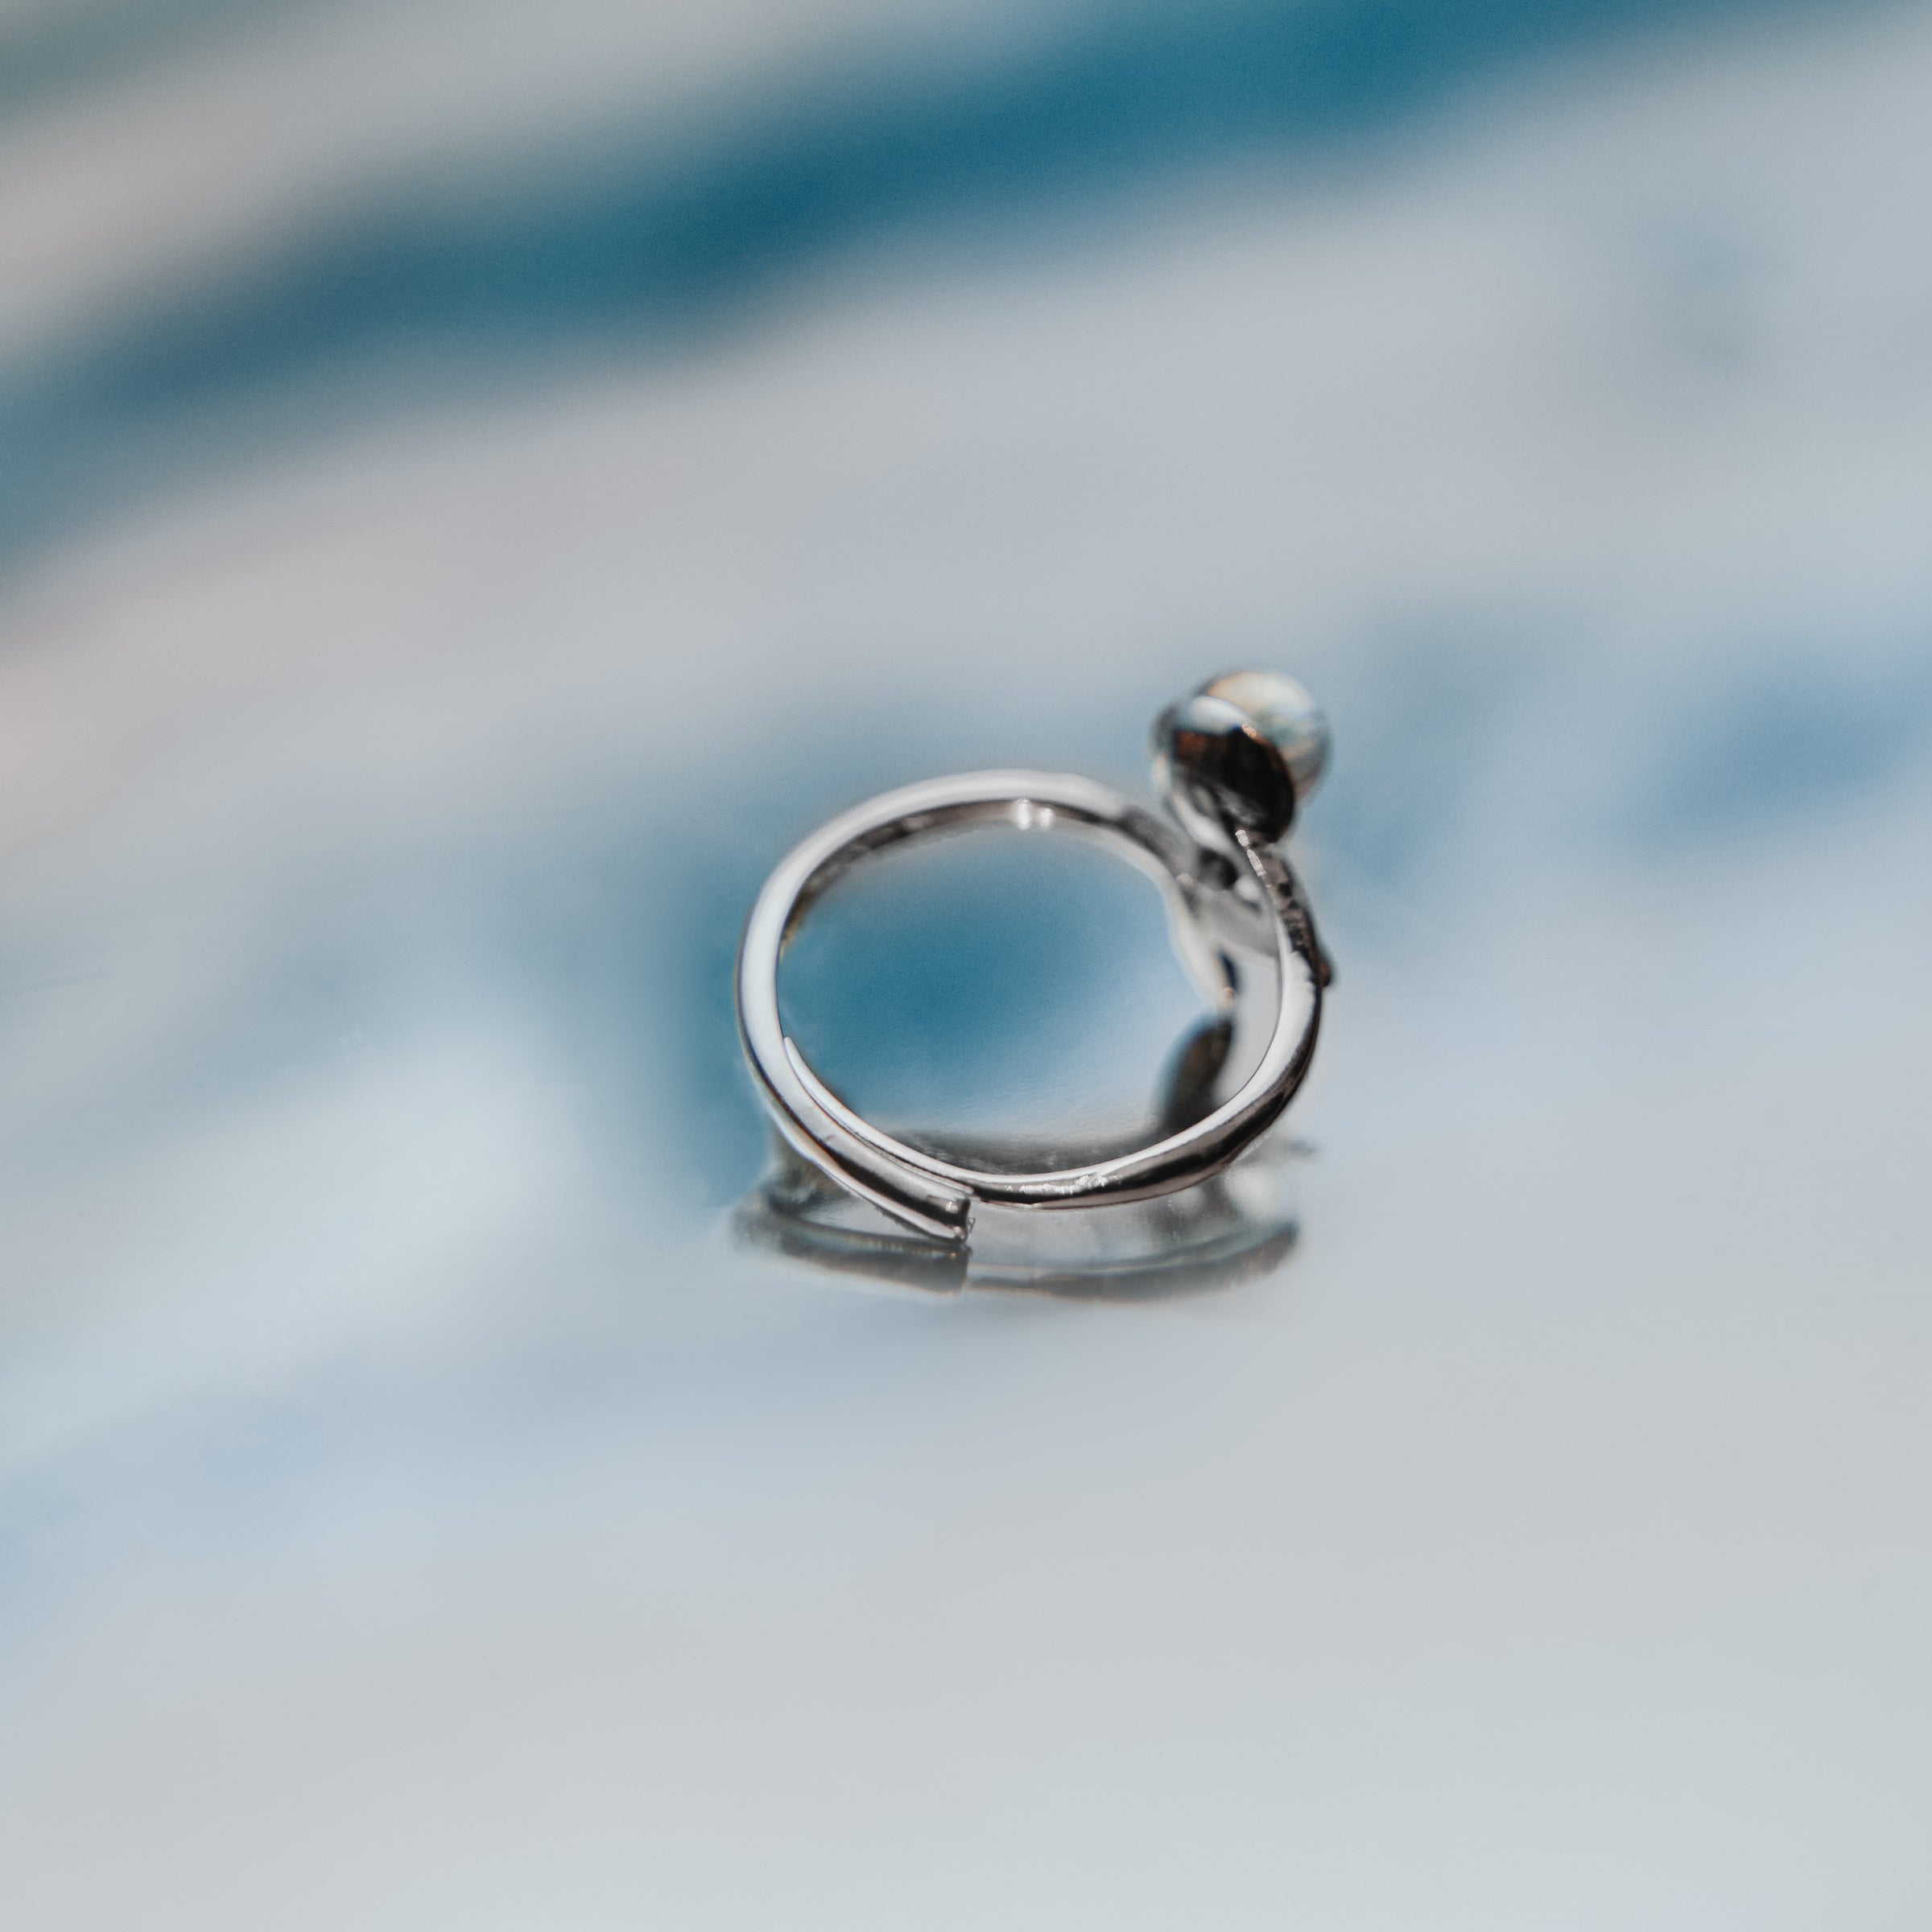 海豚環遊世界水晶戒指 Dolphin Crystal Ring